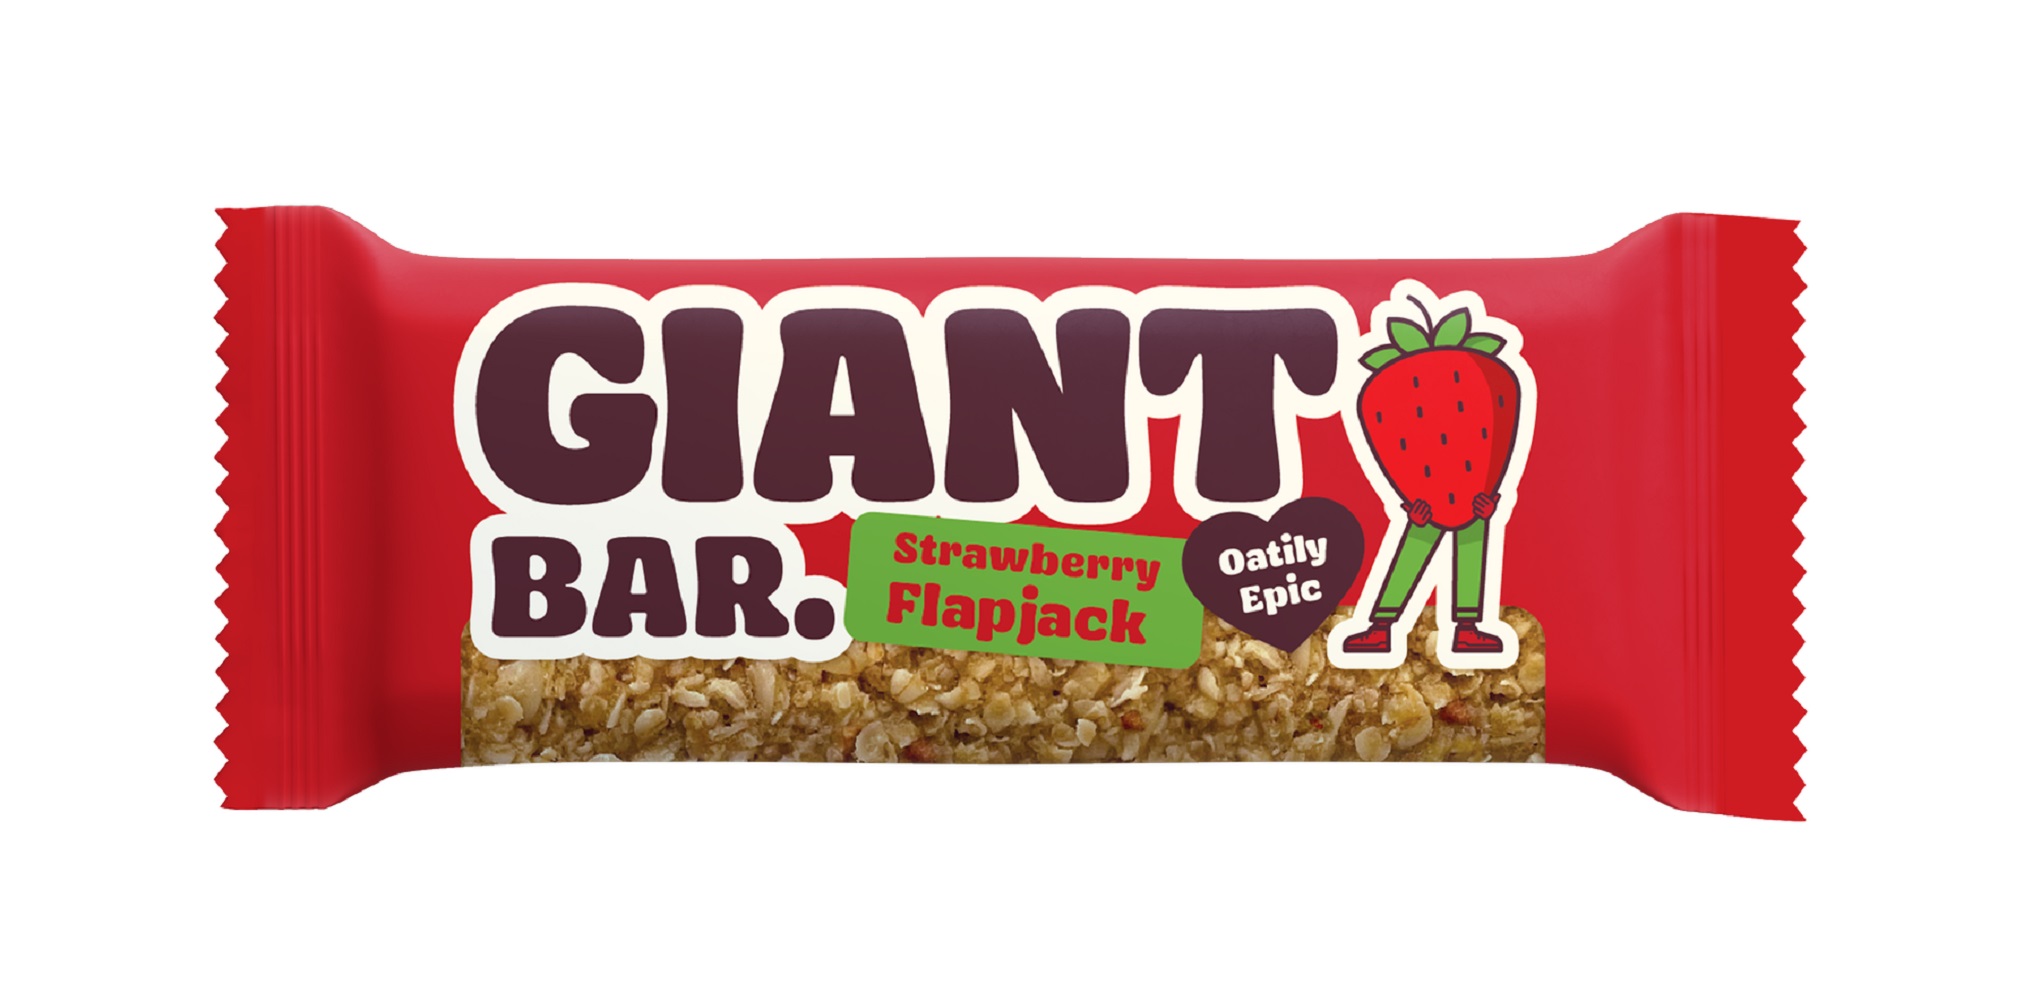 Giant Bar Strawberry